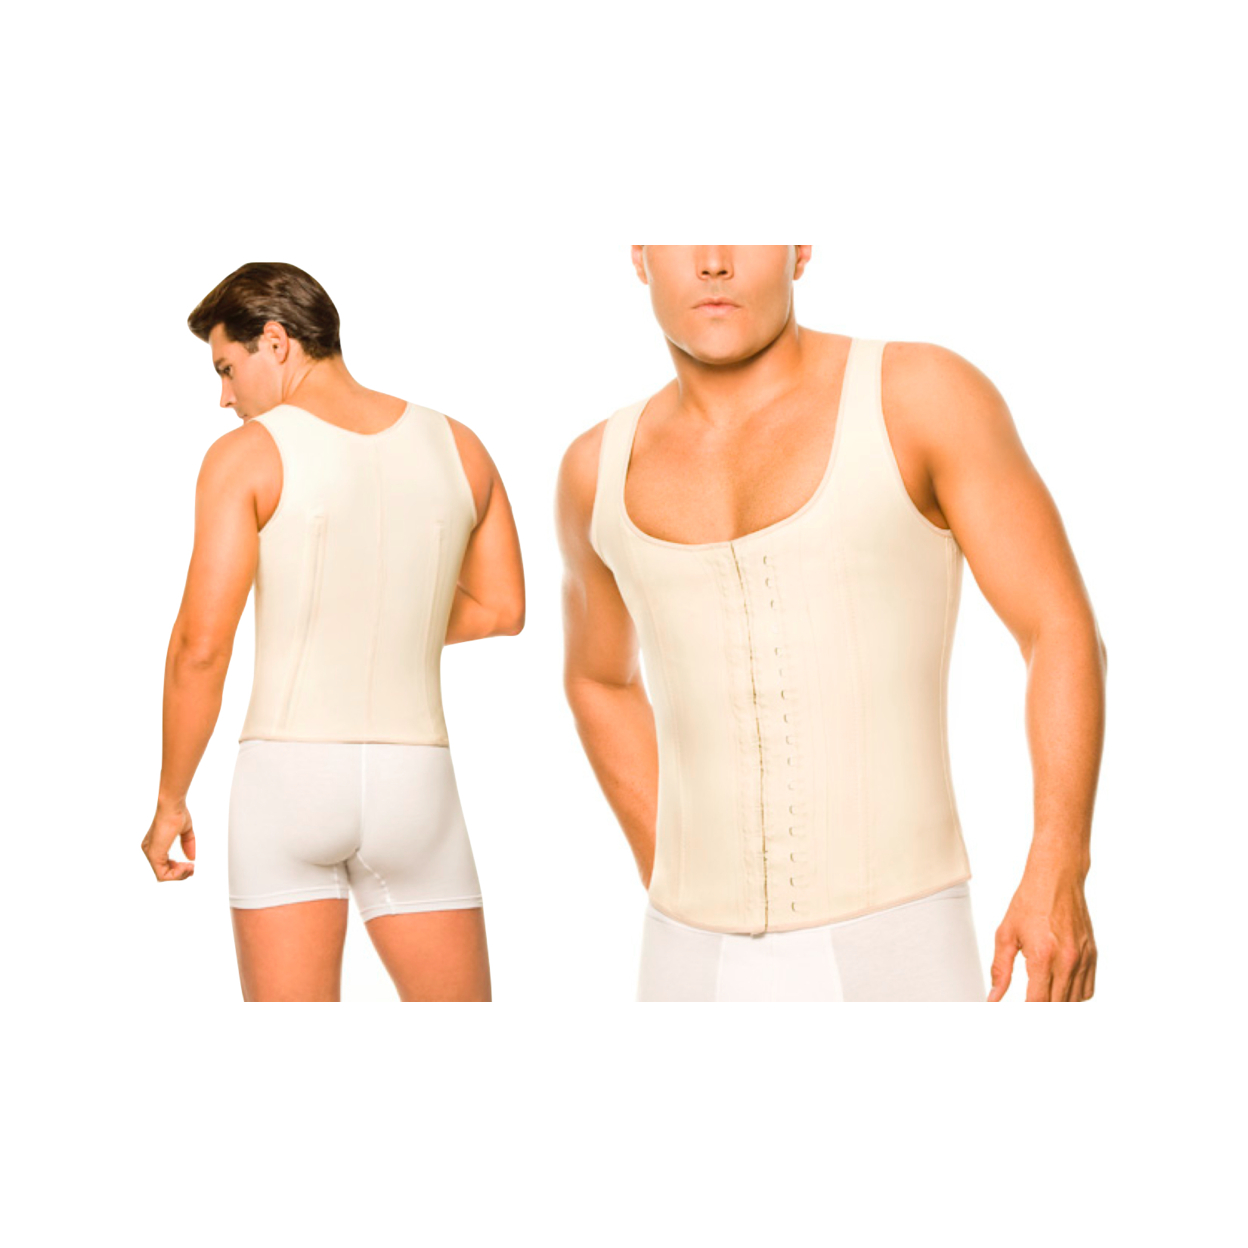 Men Waistcoat High-Compression Body Shaper In Regular And Plus Sizes - Nude, Medium